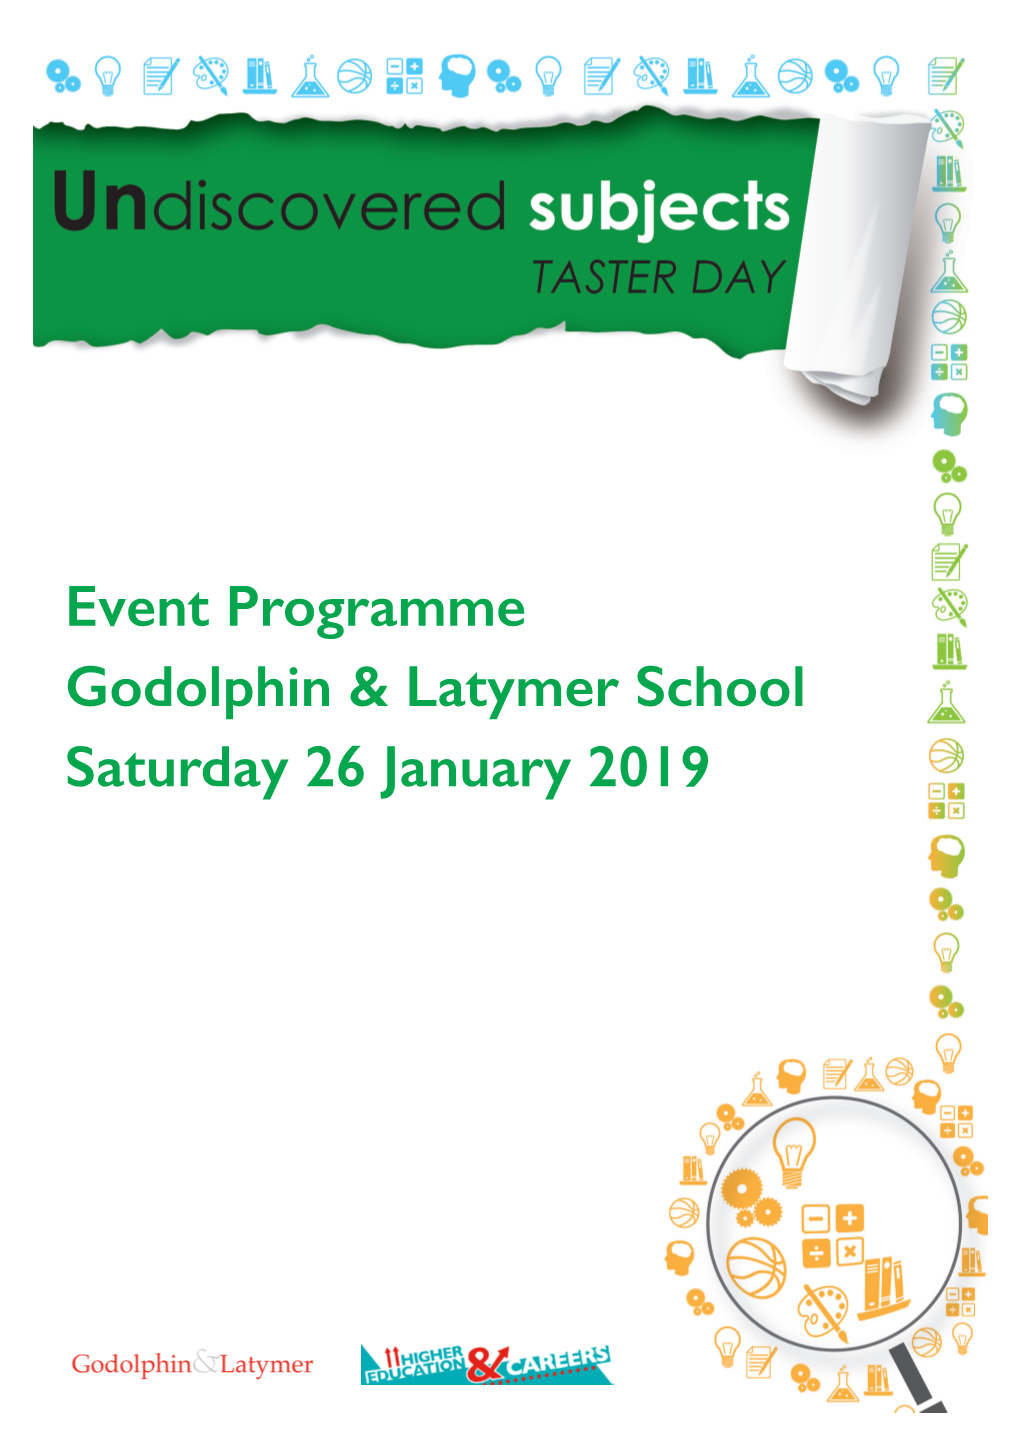 Event Programme Godolphin & Latymer School Saturday 26